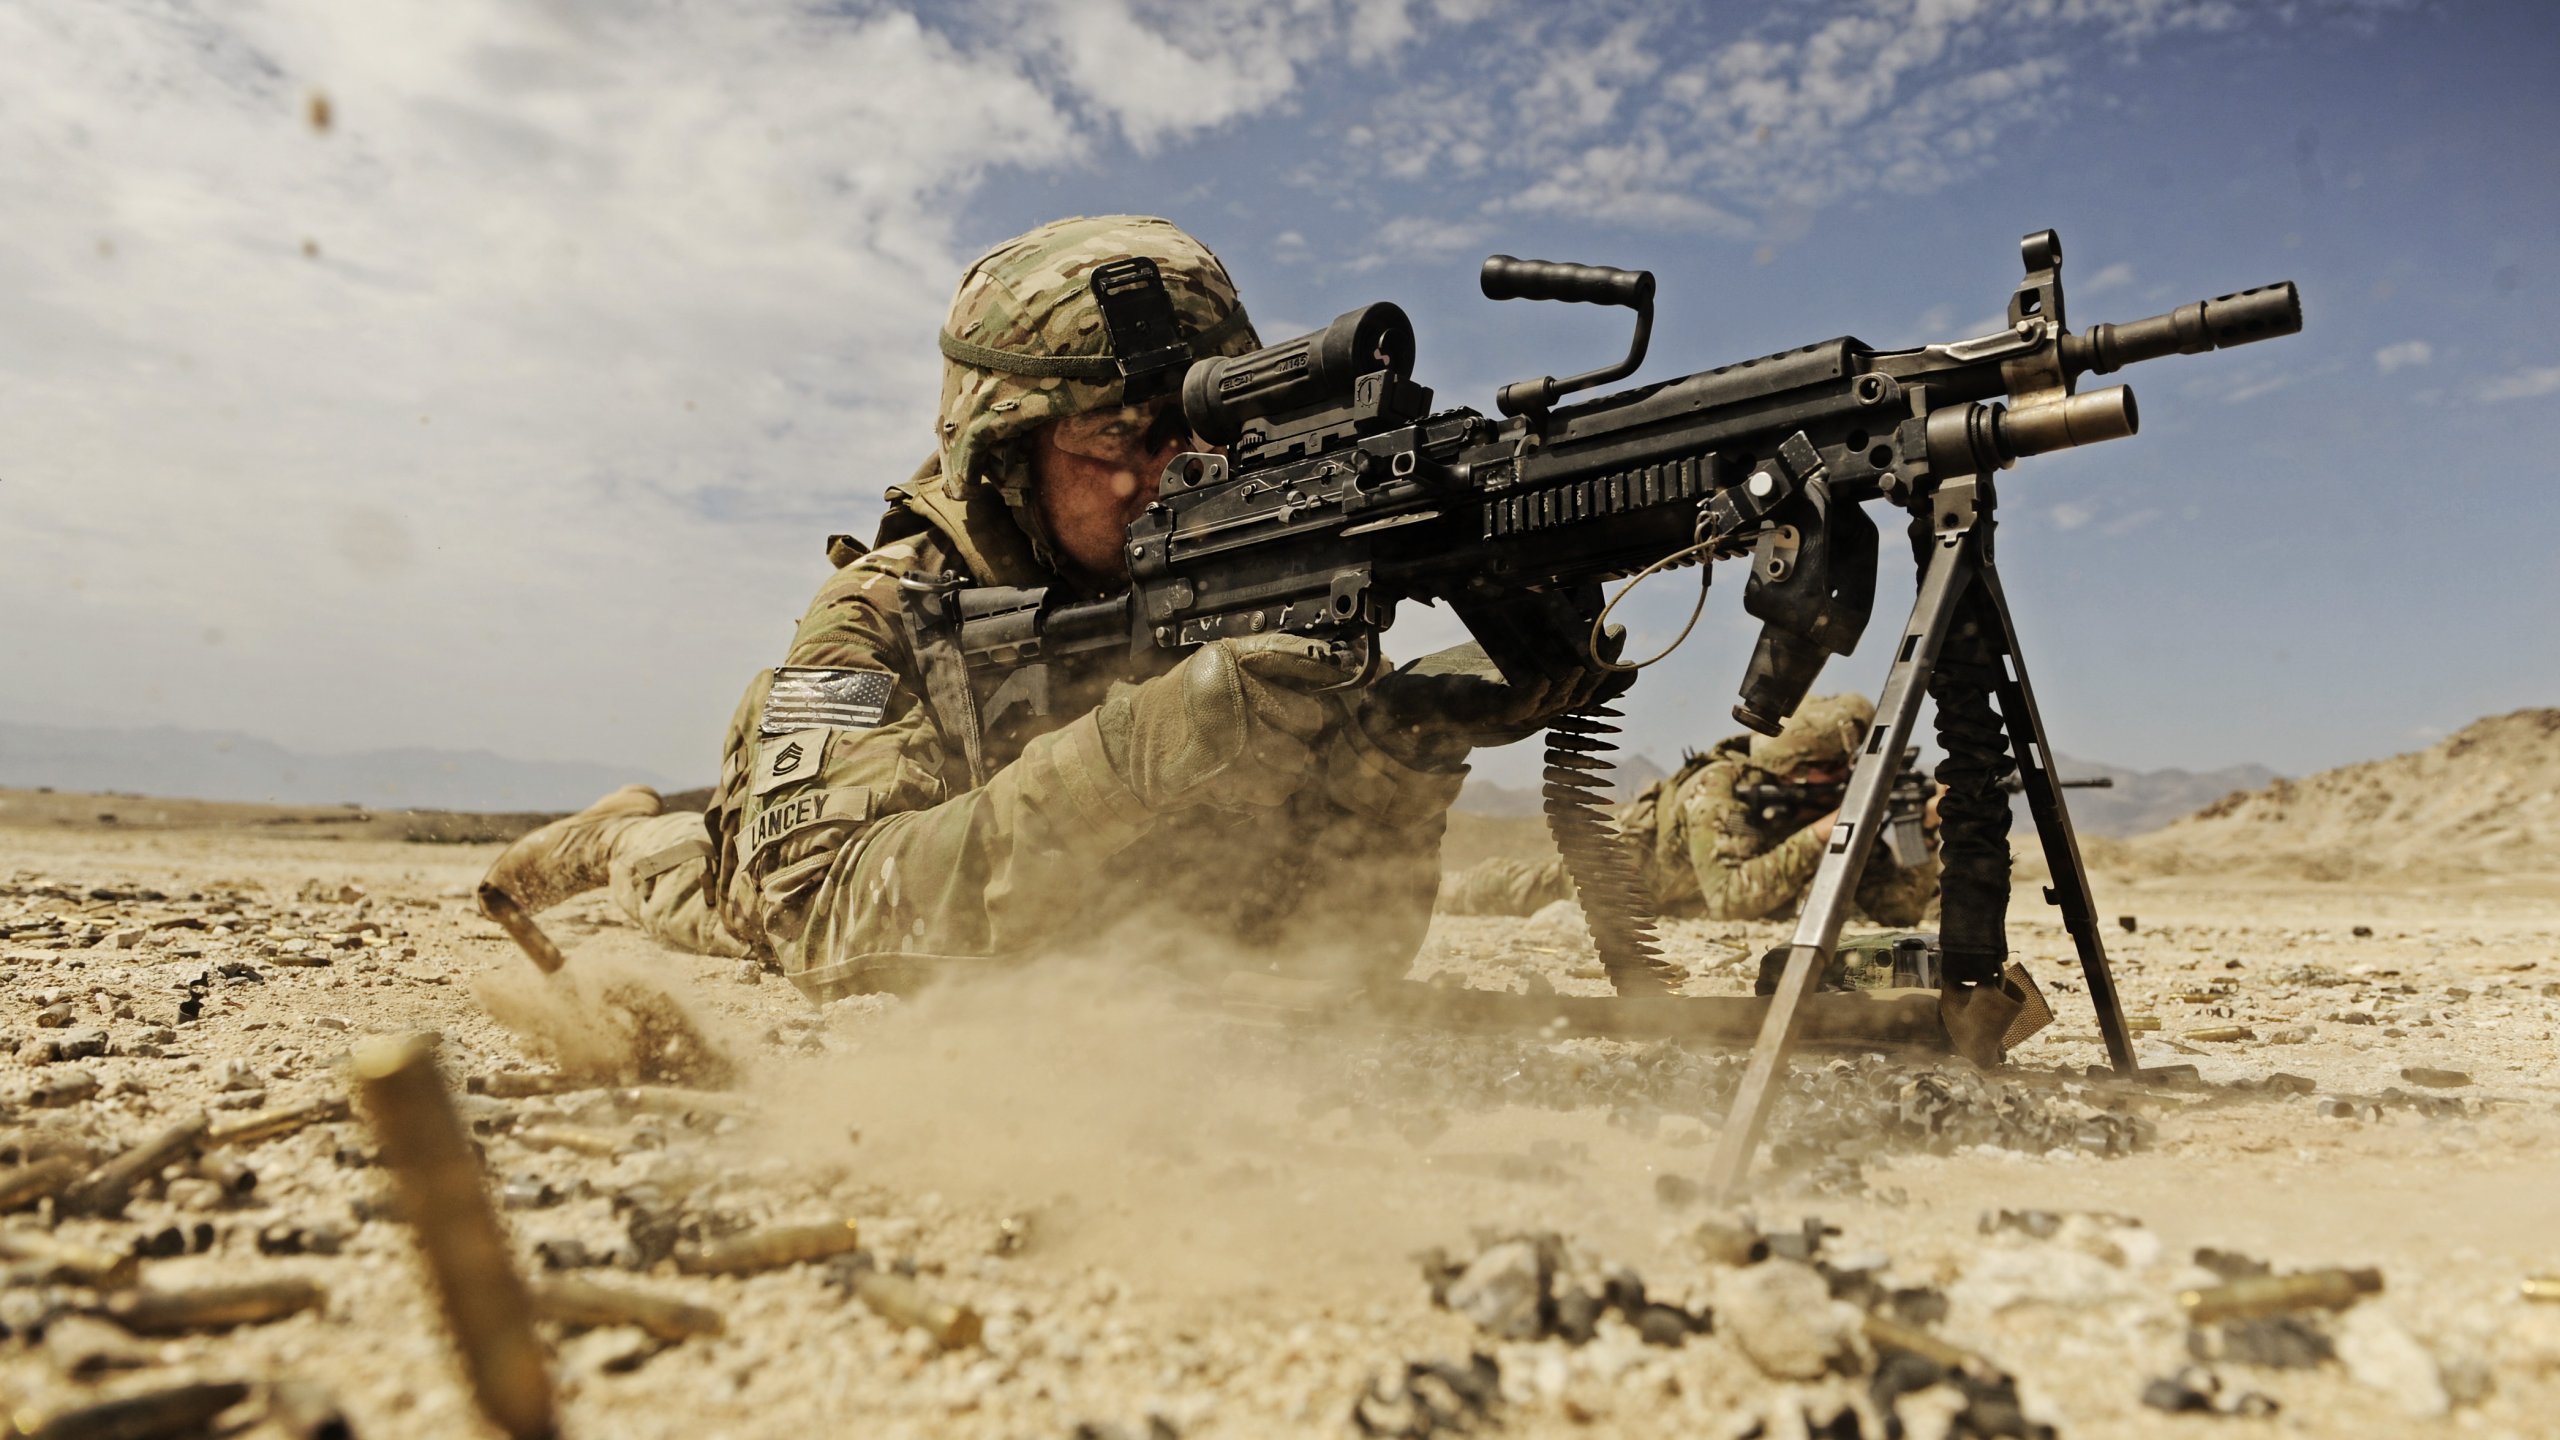 M249 Saw HD Wallpaper Background Image Id